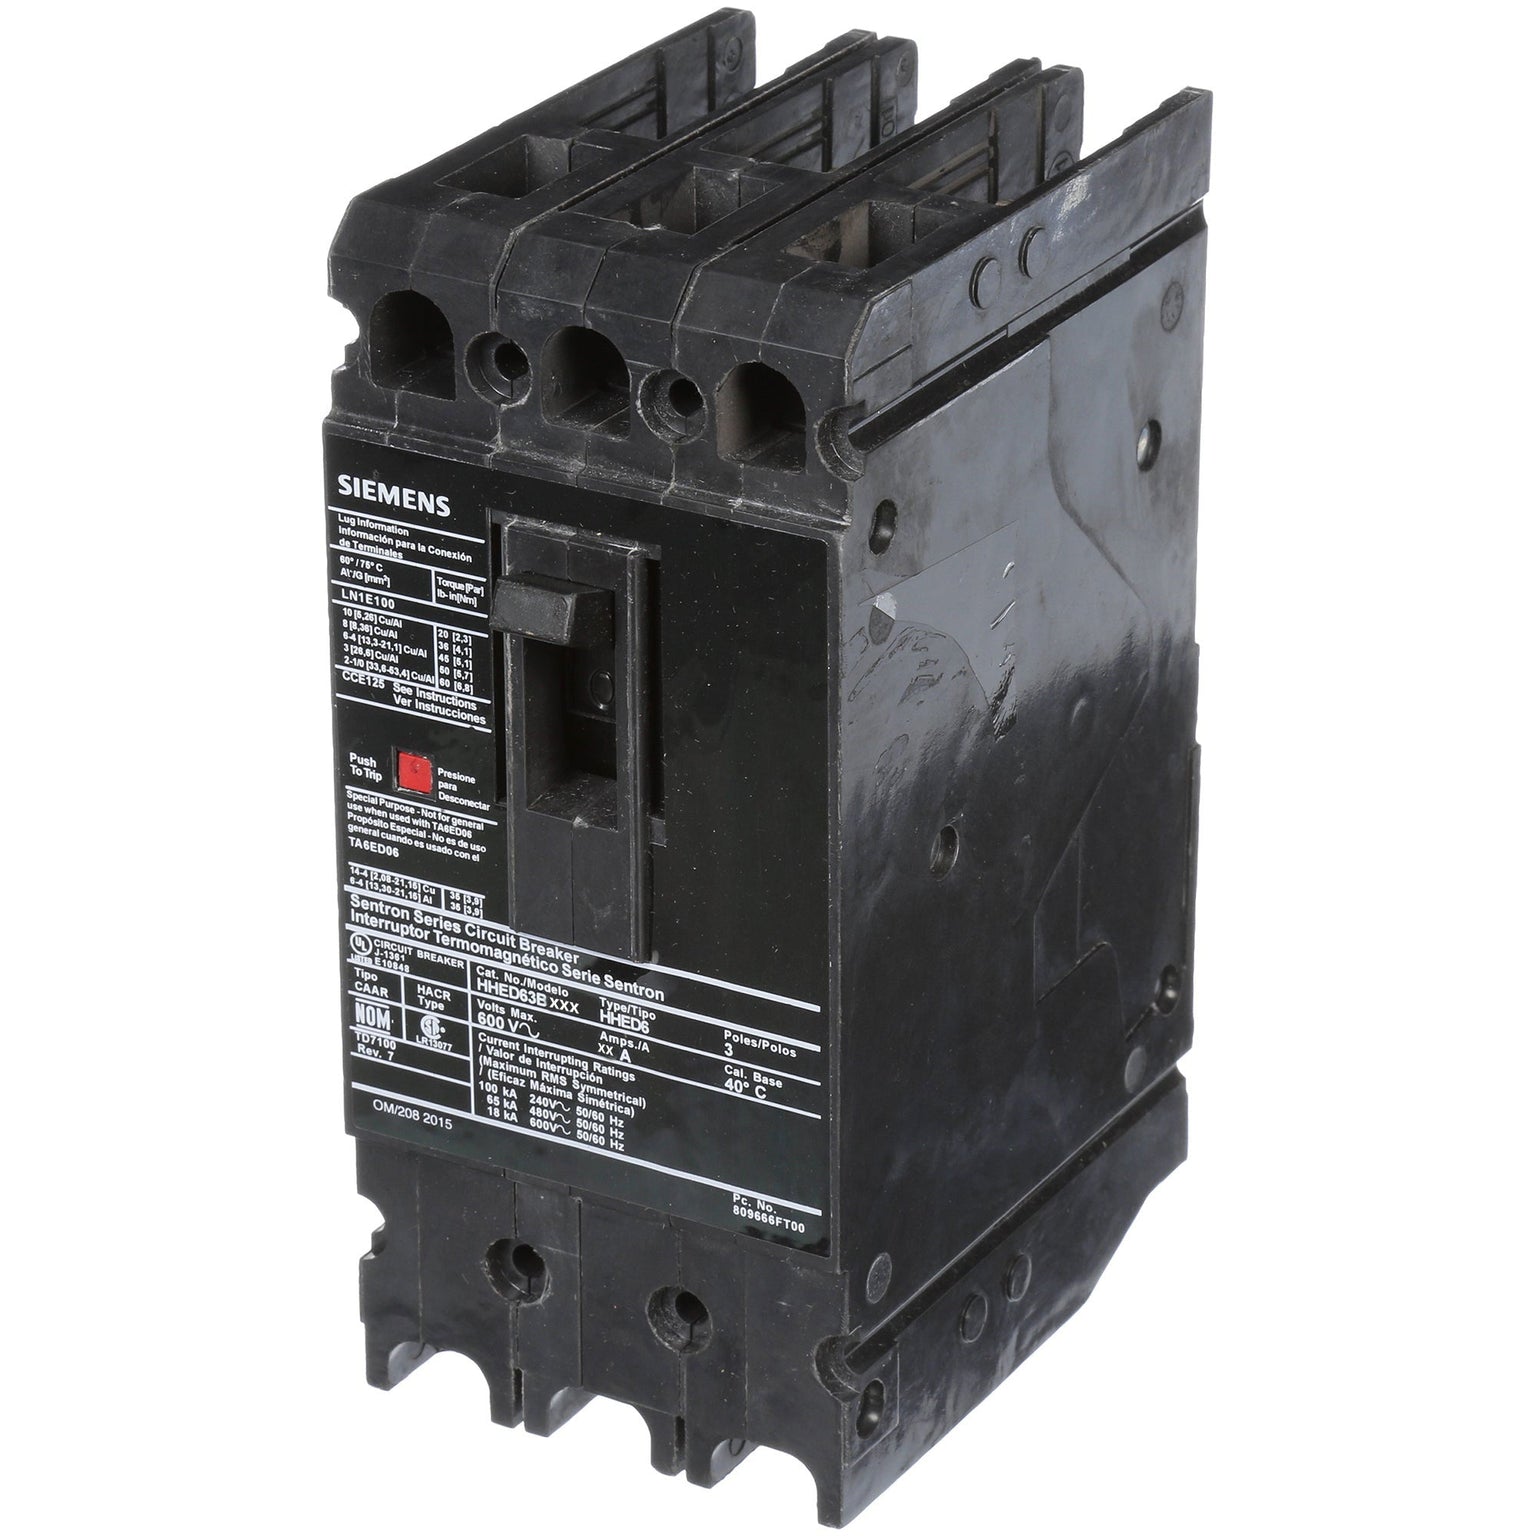 HHED63B030L - Siemens - 30 Amp Molded Case Circuit Breaker